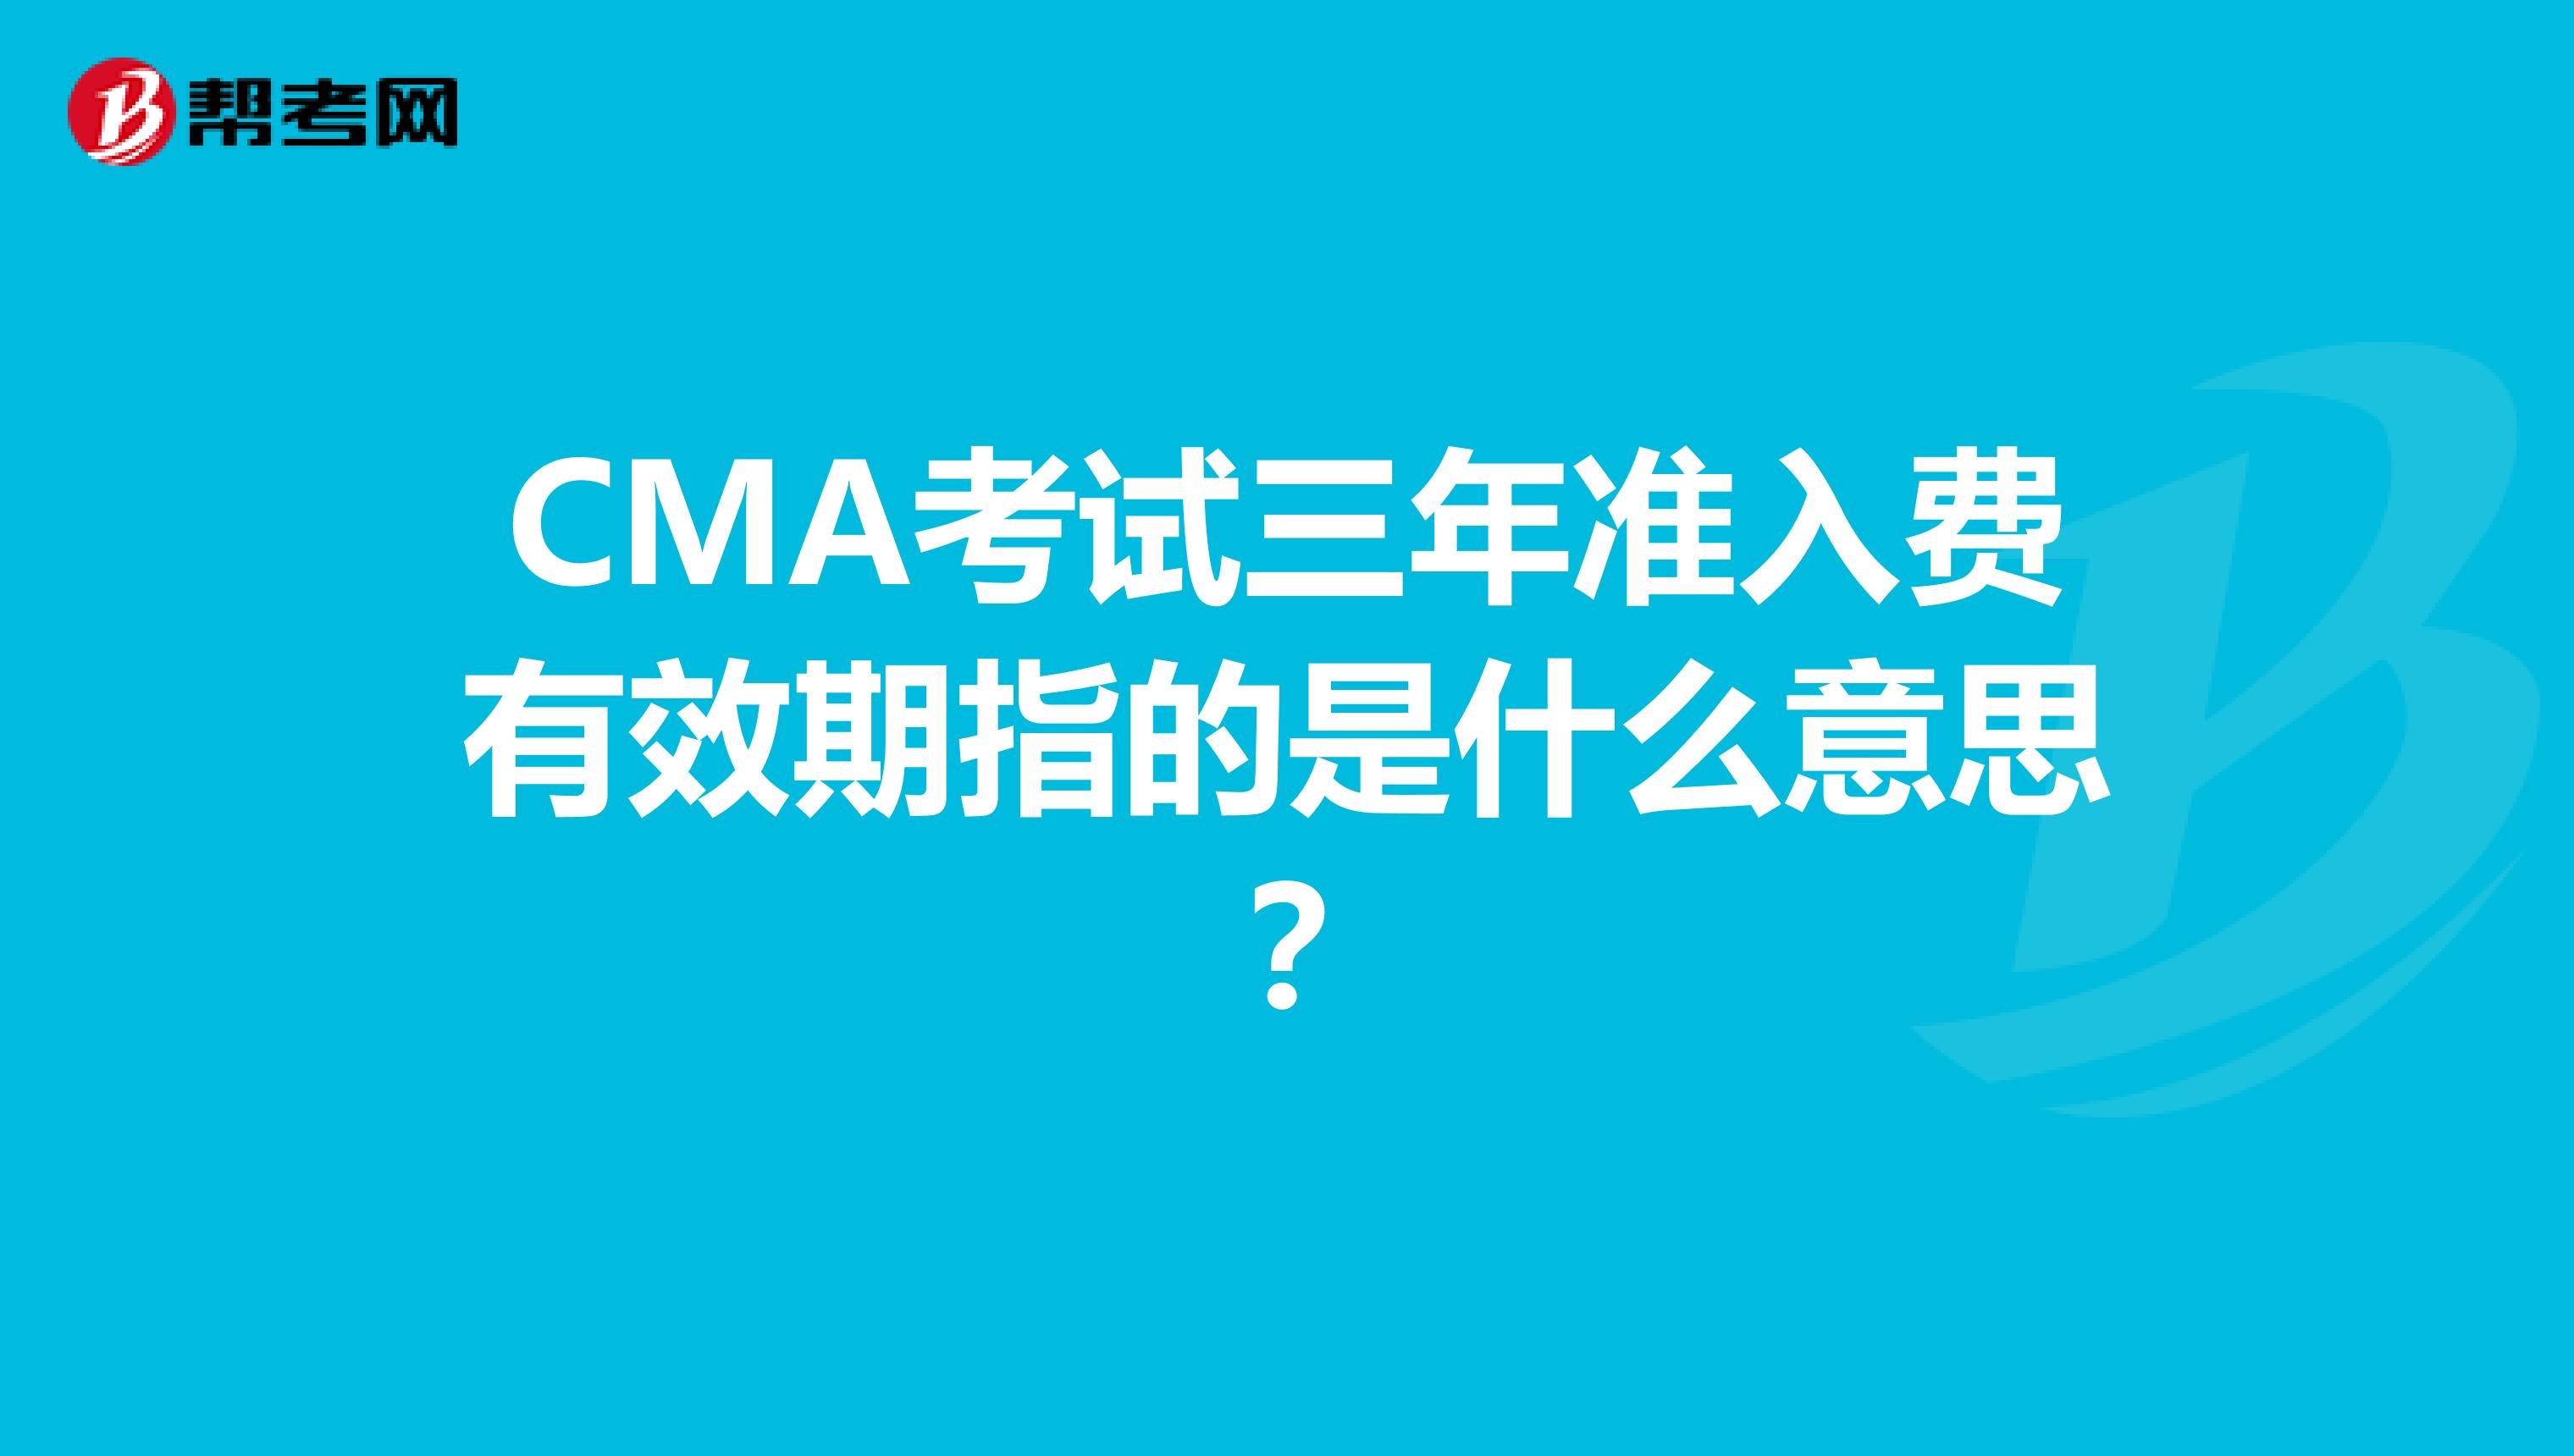 CMA考试三年准入费有效期指的是什么意思？